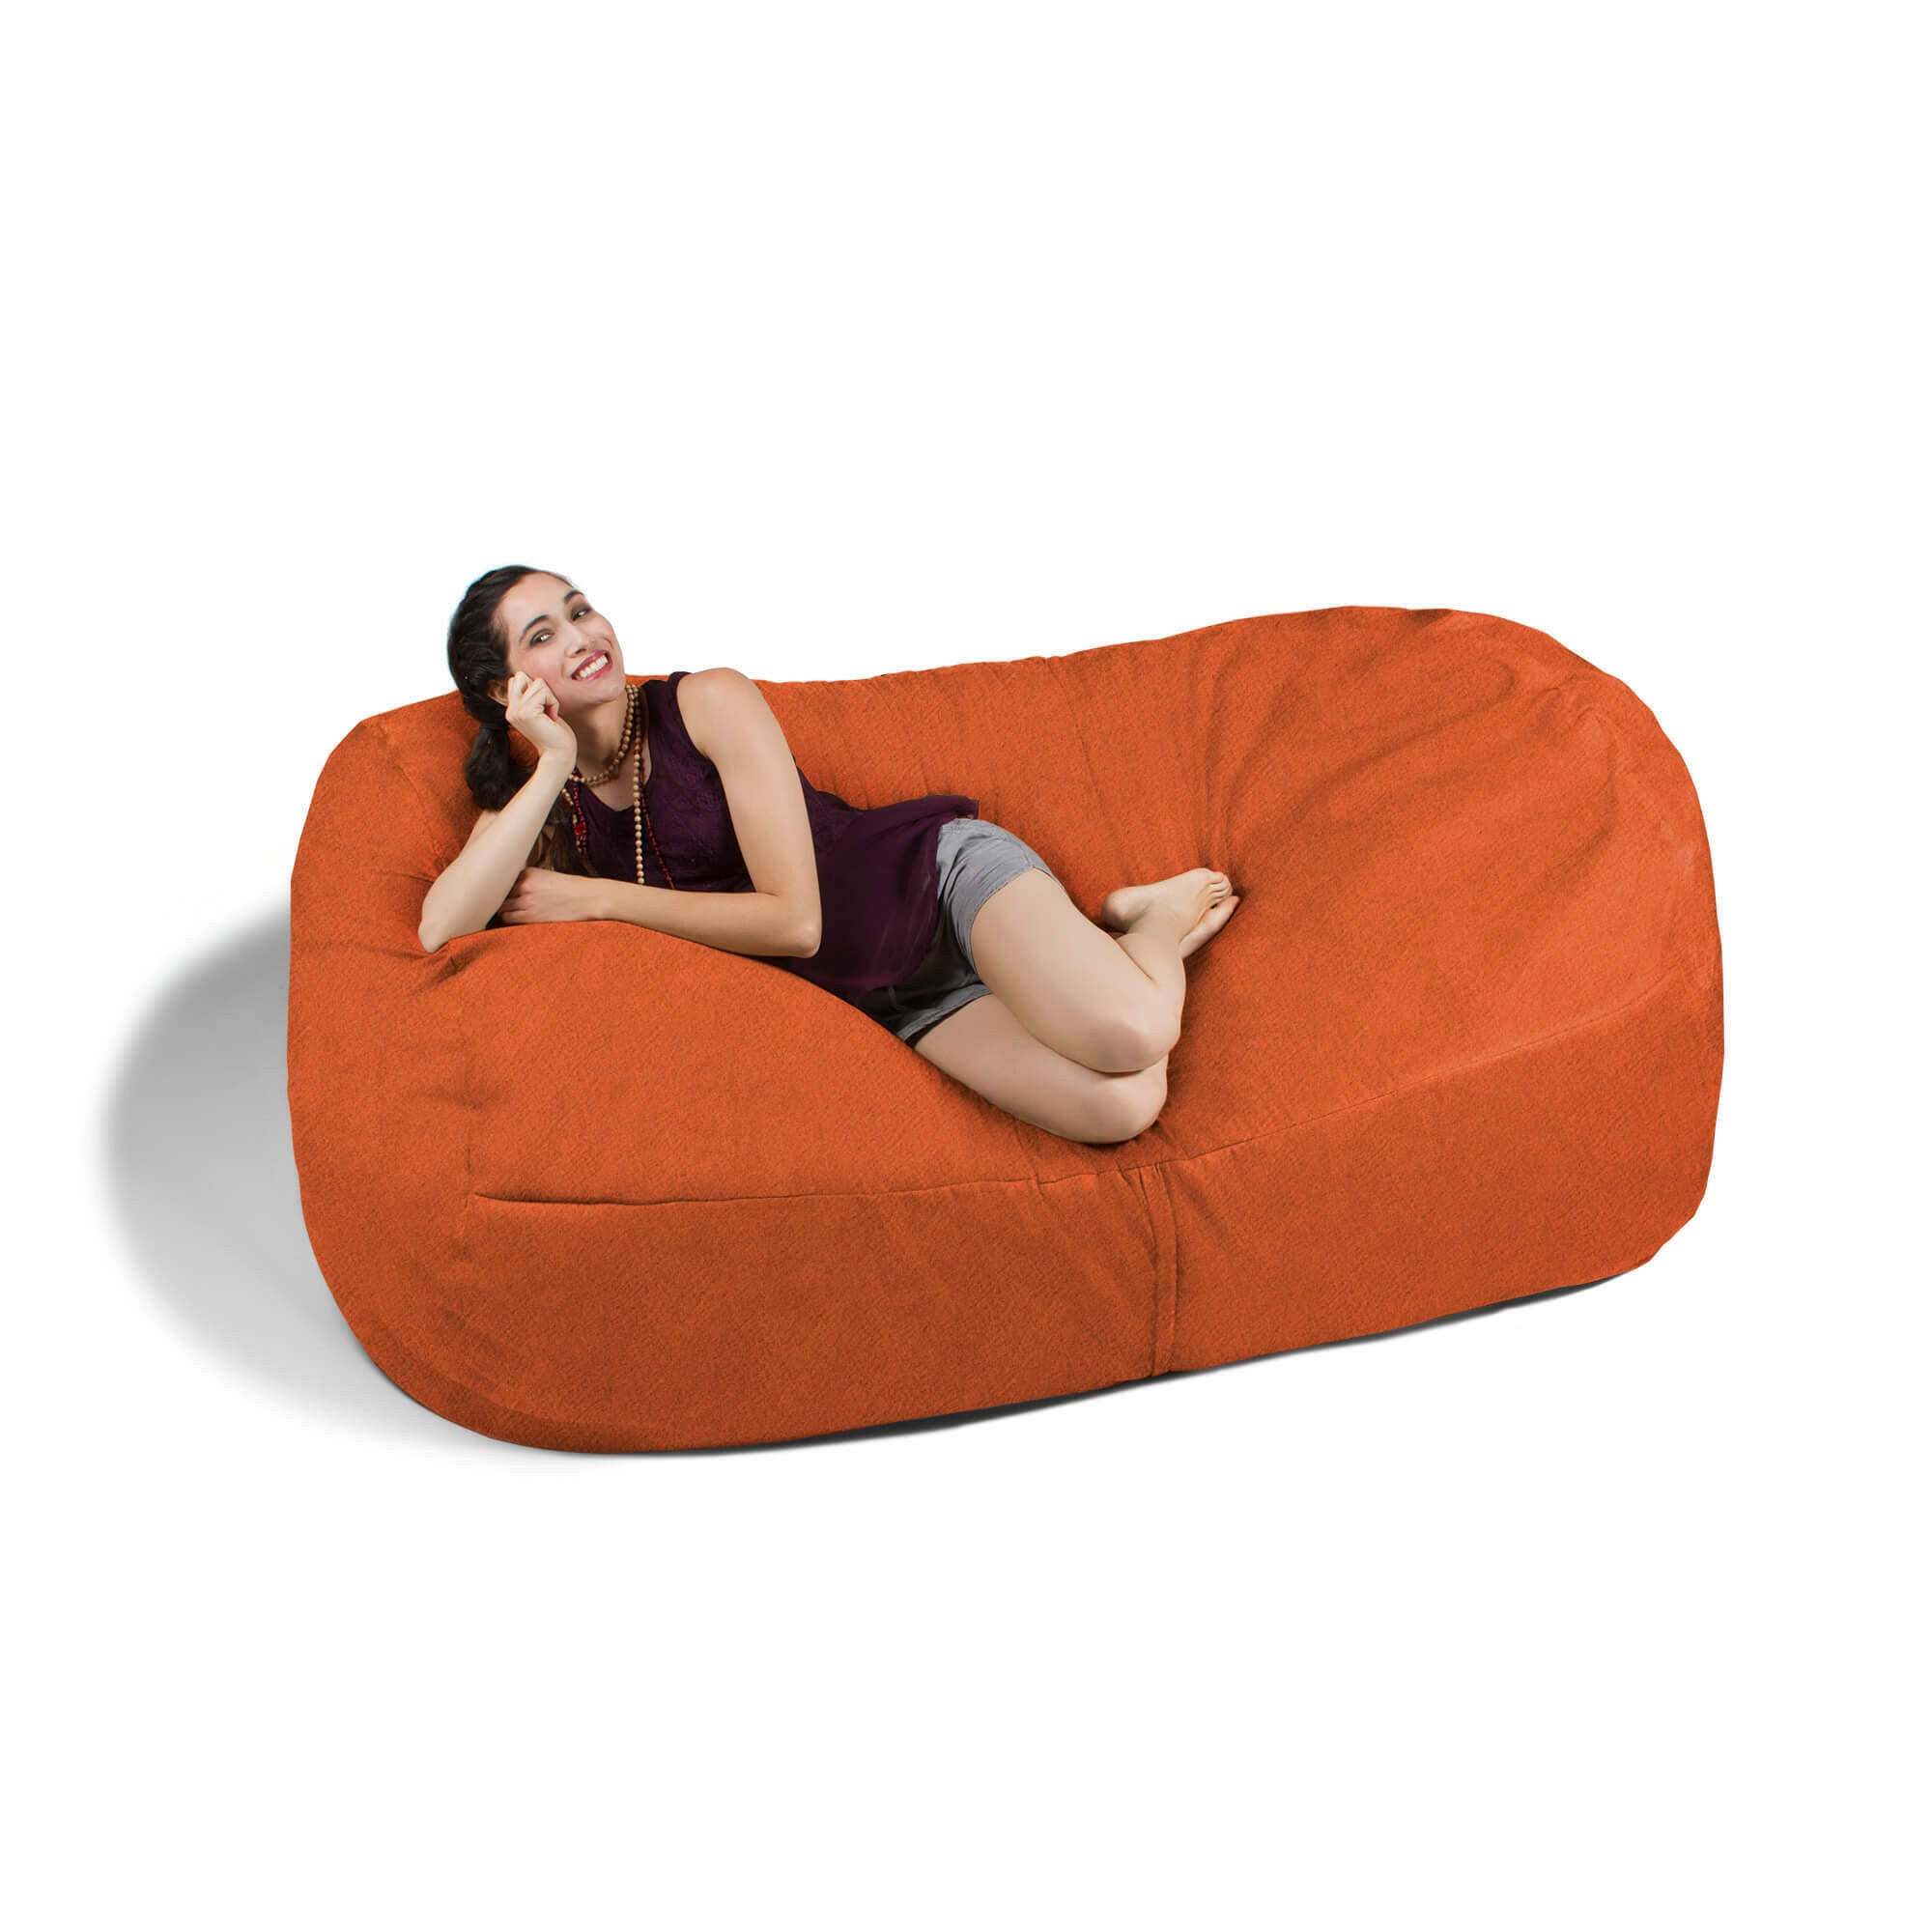 Giant Kids Bean Bag Gaming Lounge Chair 7' Microsuede Sofa Made in USA - Kids Eye Candy 